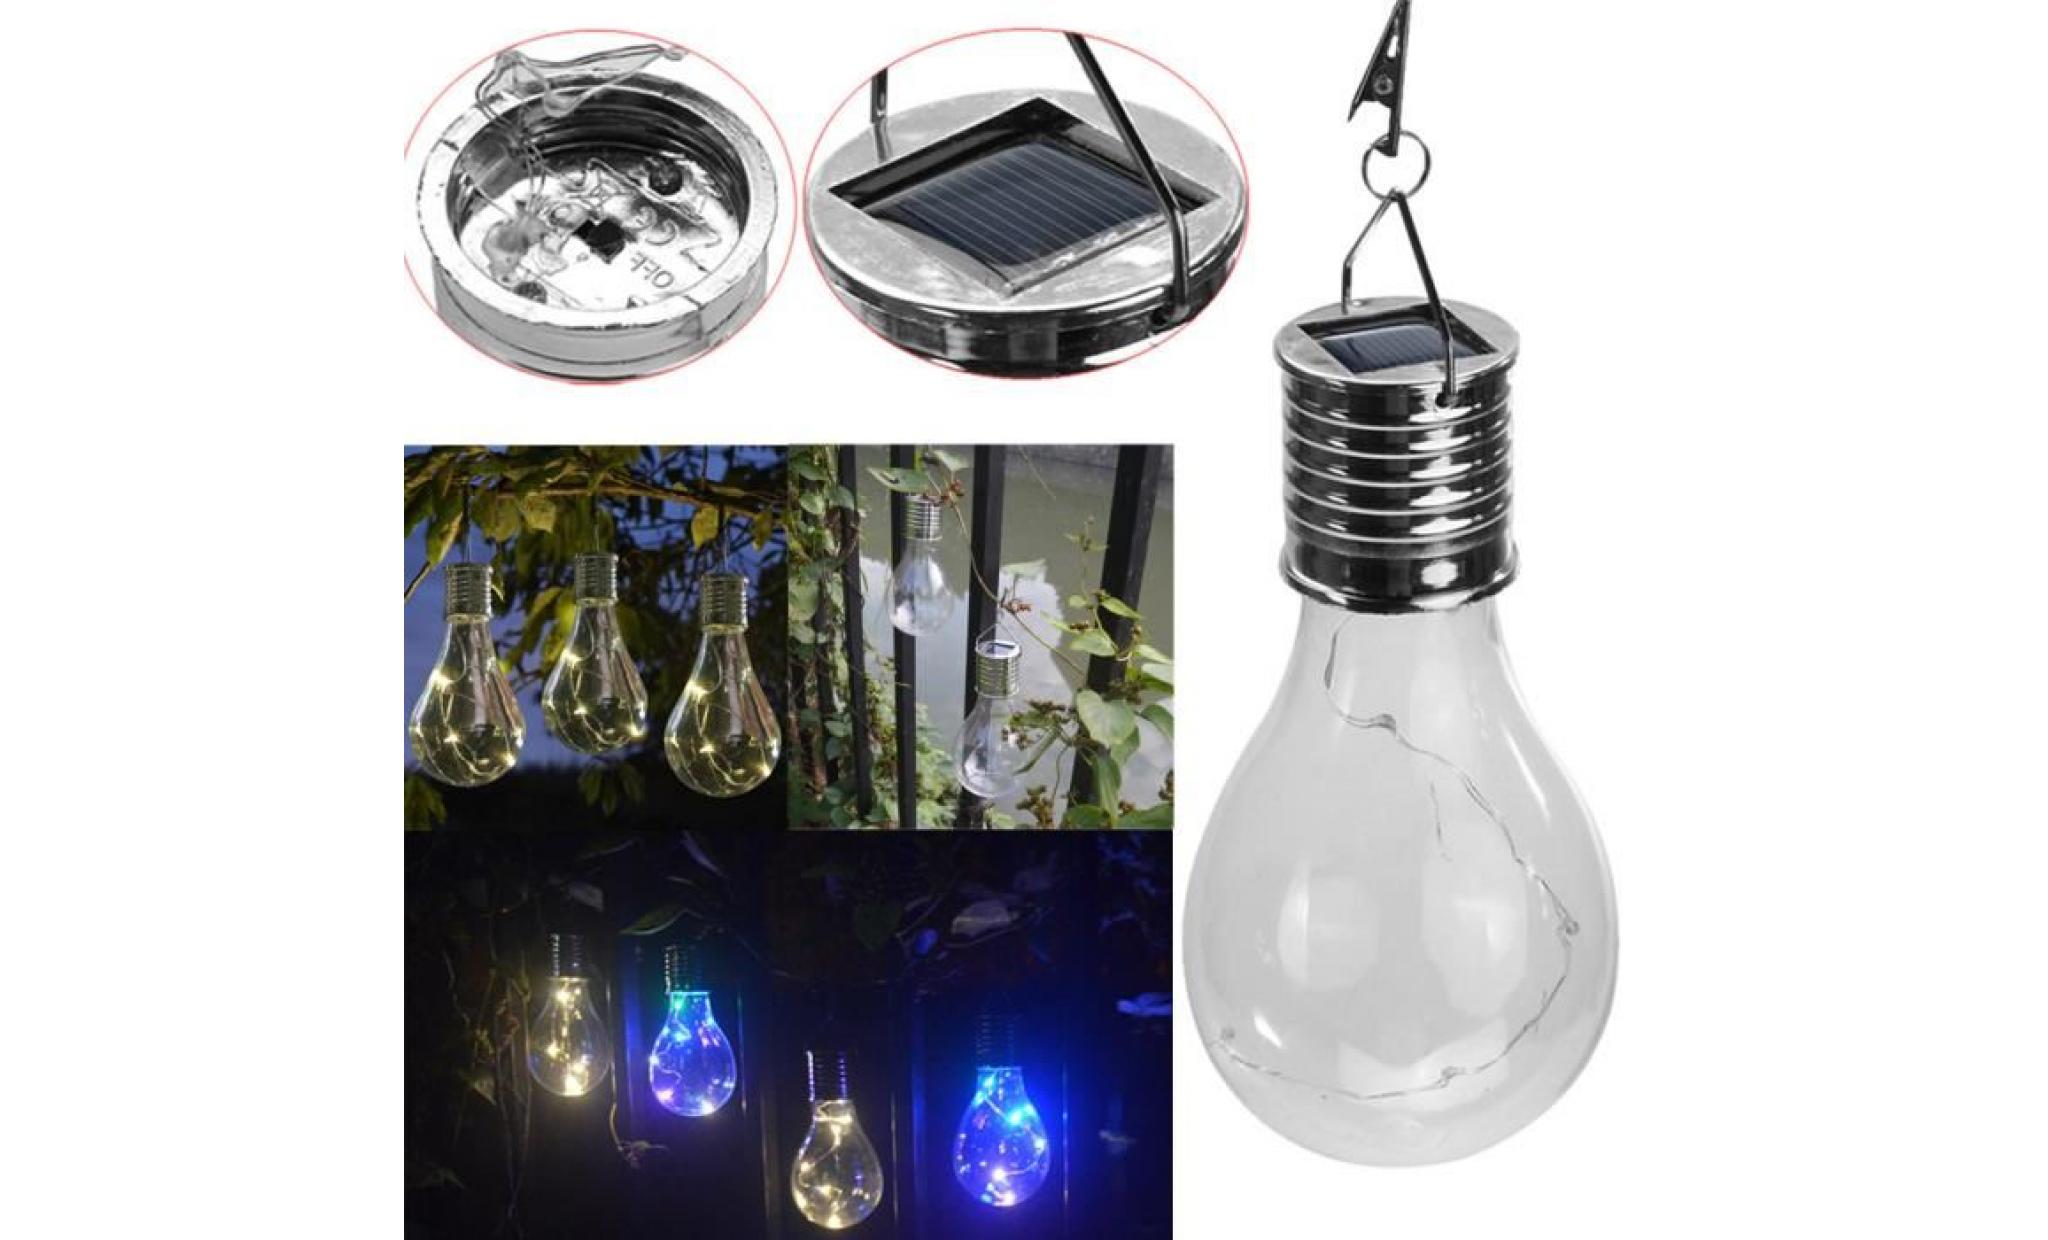 waterproof solar rotatable outdoor garden camping hanging led light lamp bulb  qinhig968